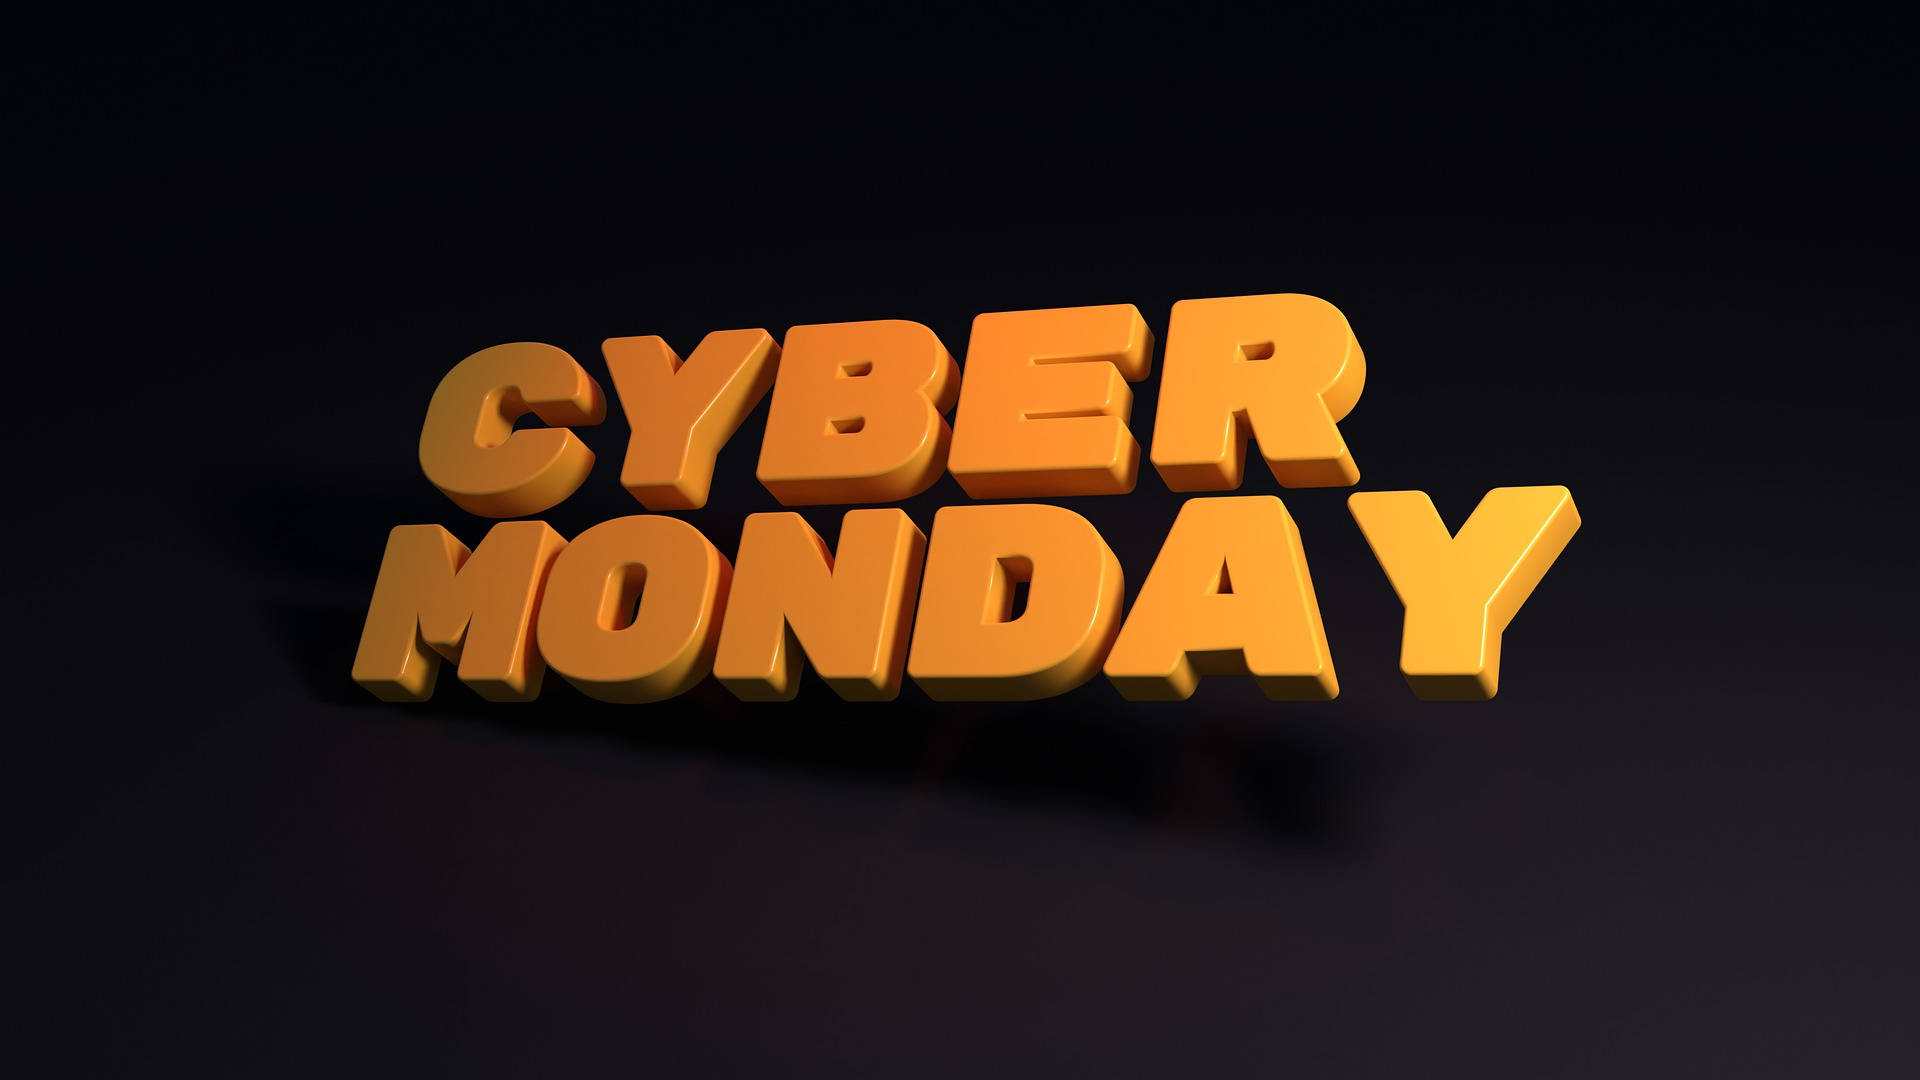 Letras3d Doradas Para El Cyber Monday Fondo de pantalla